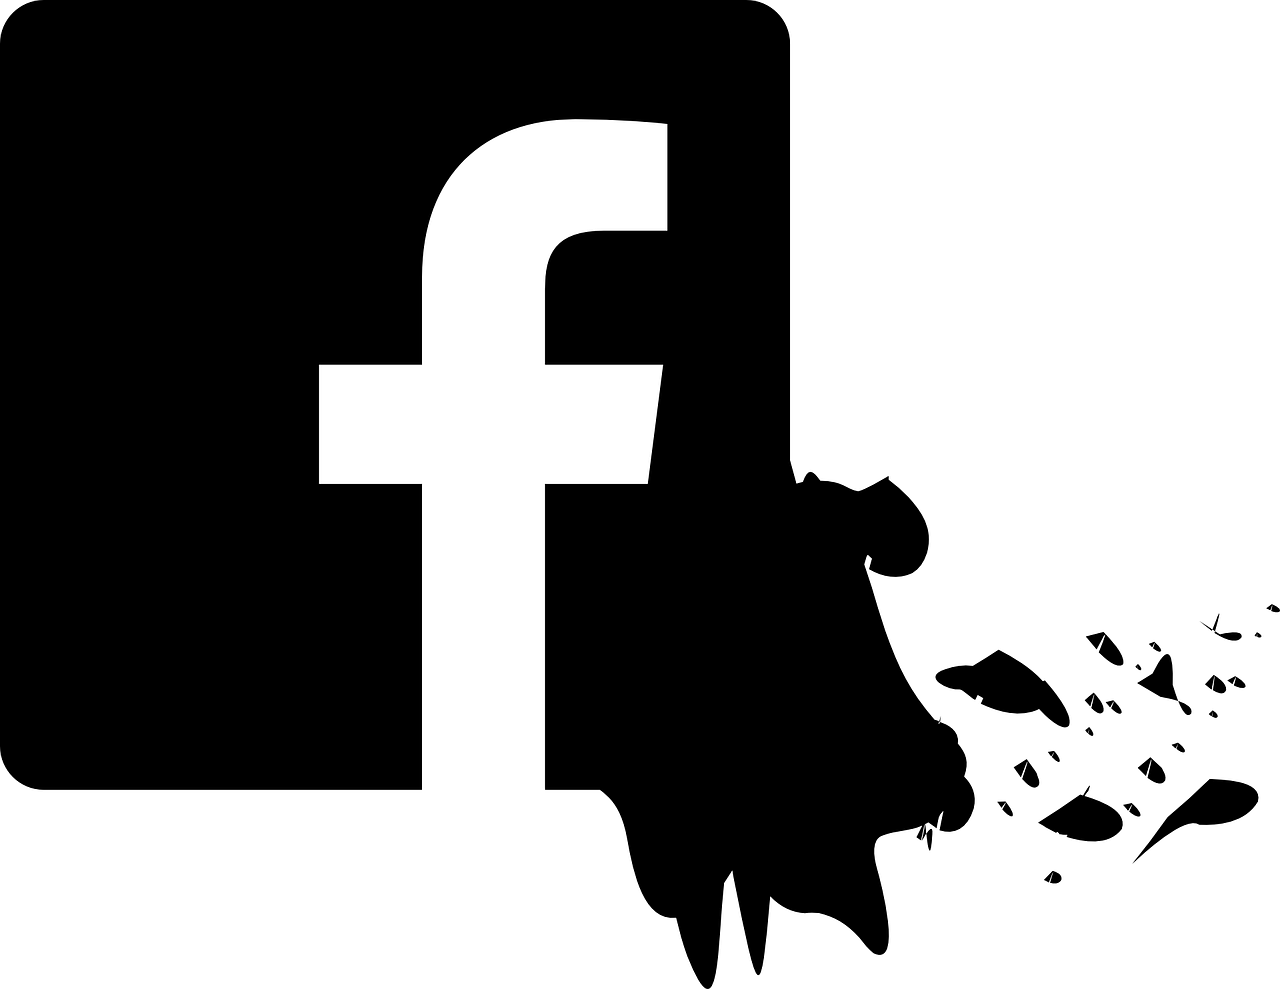 facebook fb logo free photo